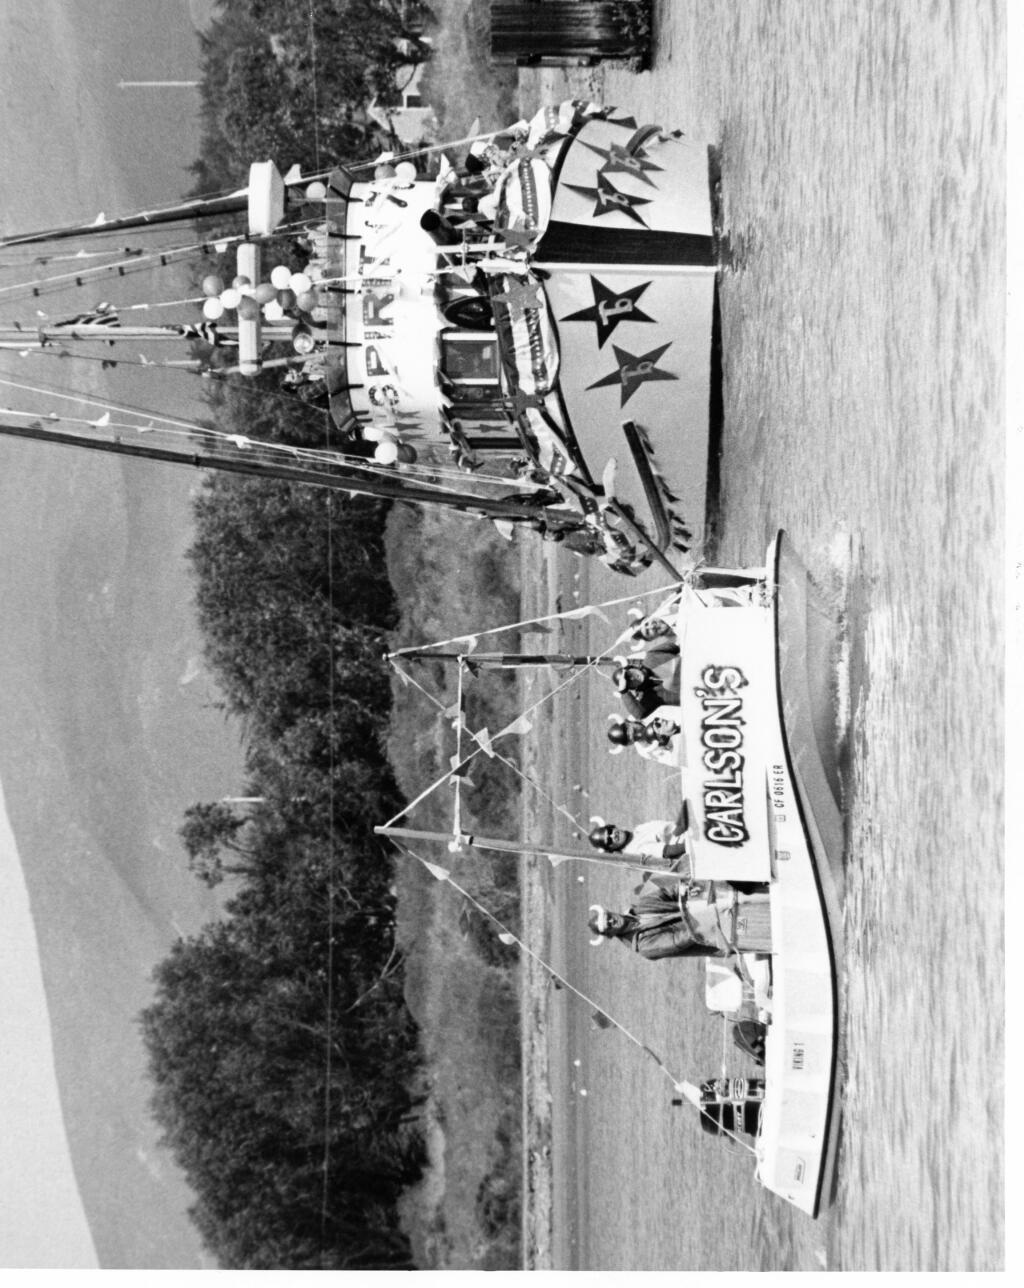 Decorated boats at the Bodega Bay Fisherman’s Festival in 1976. (The Press Democrat)